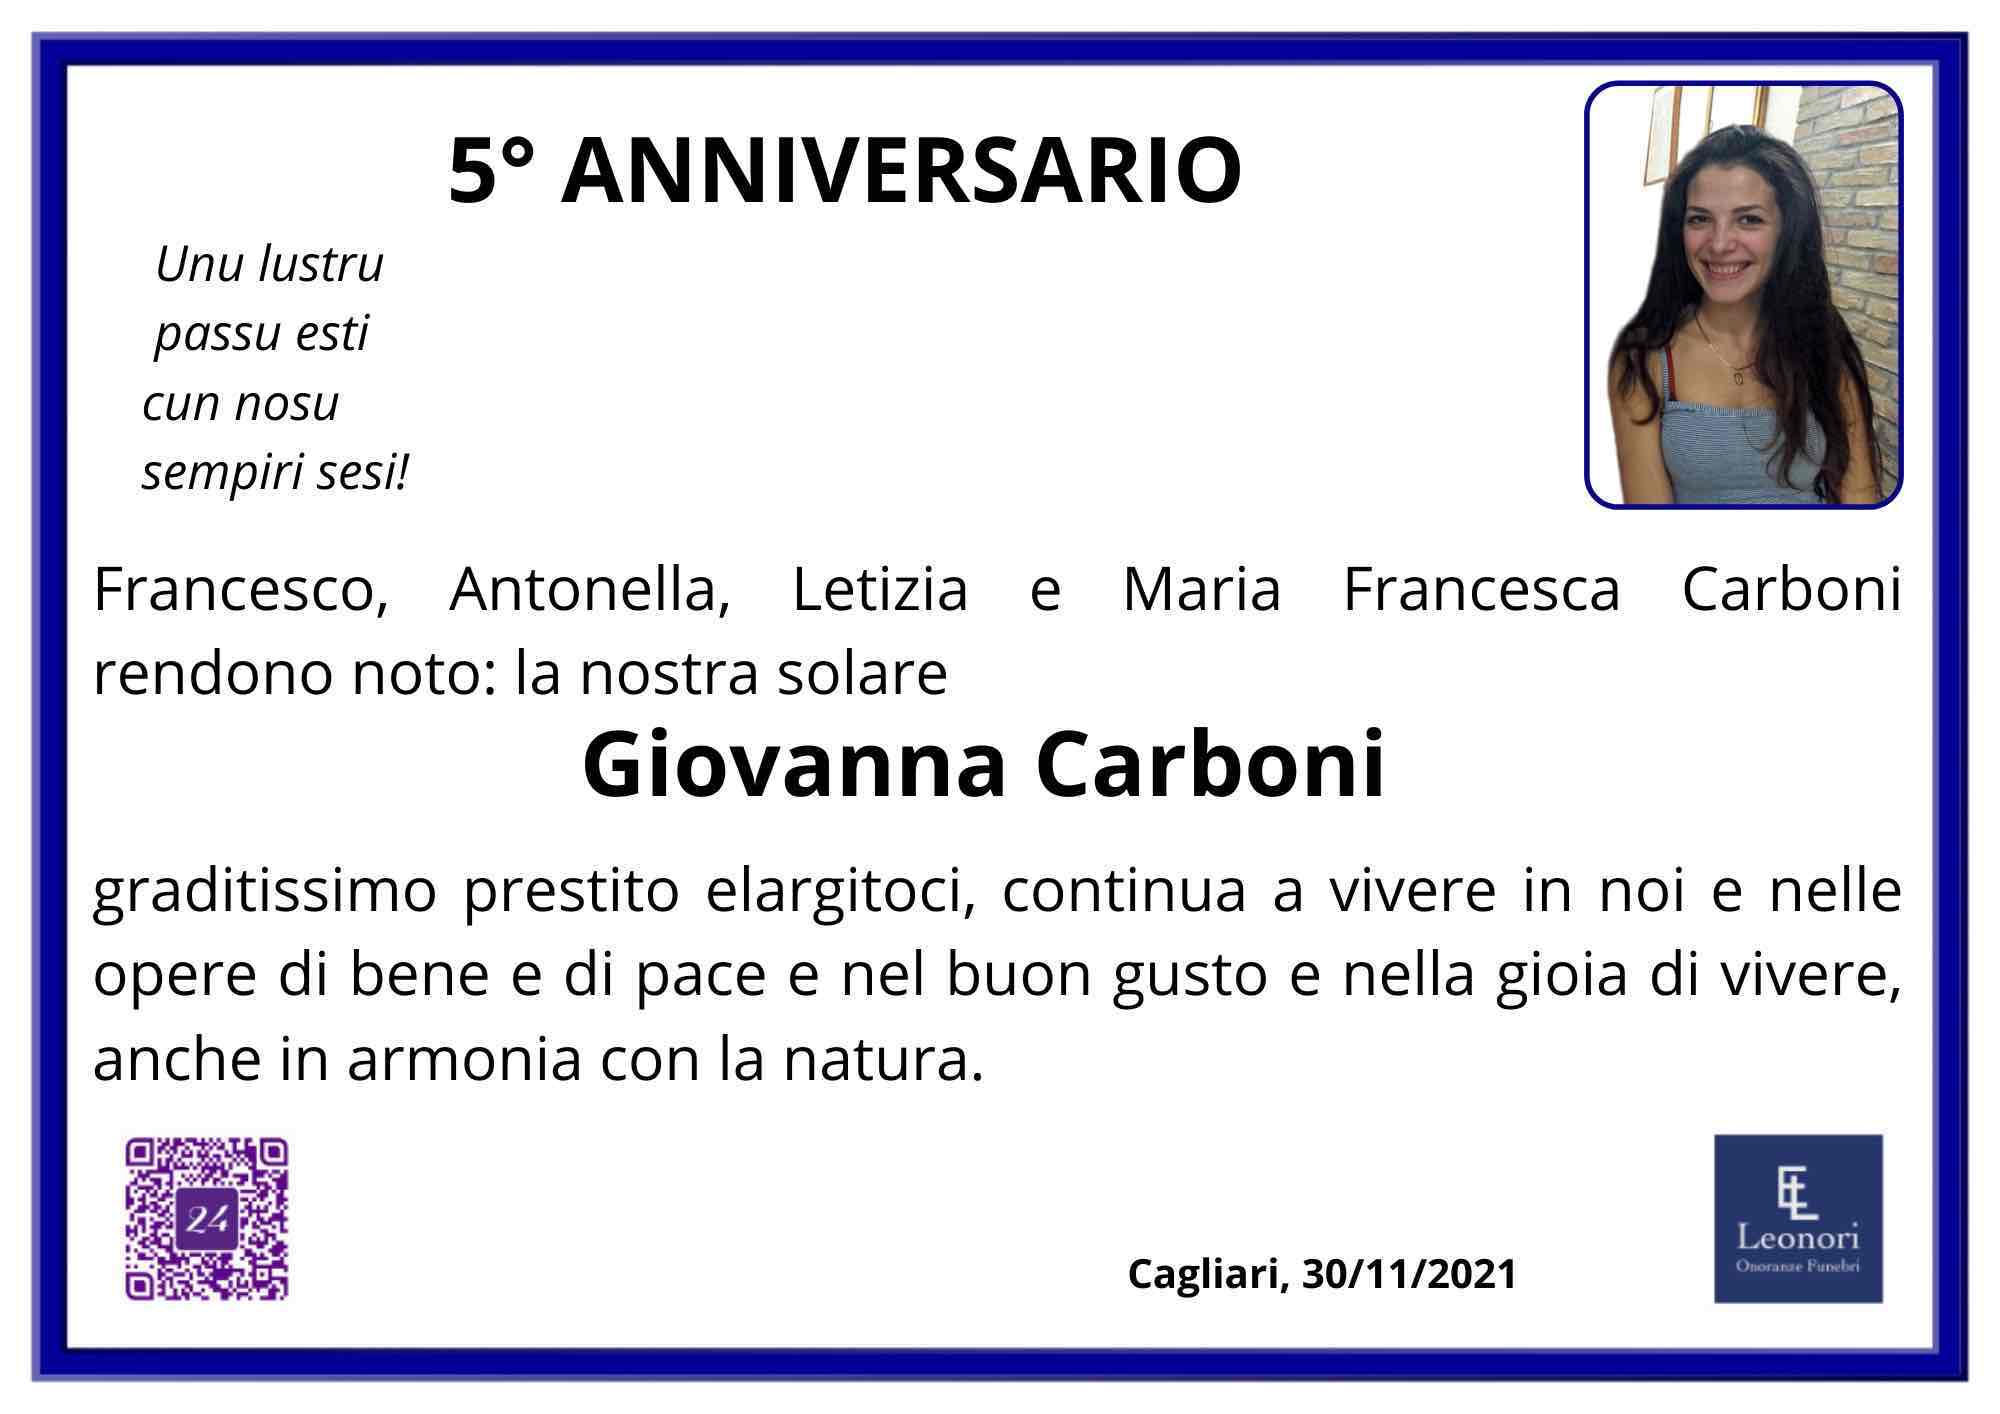 Giovanna Carboni